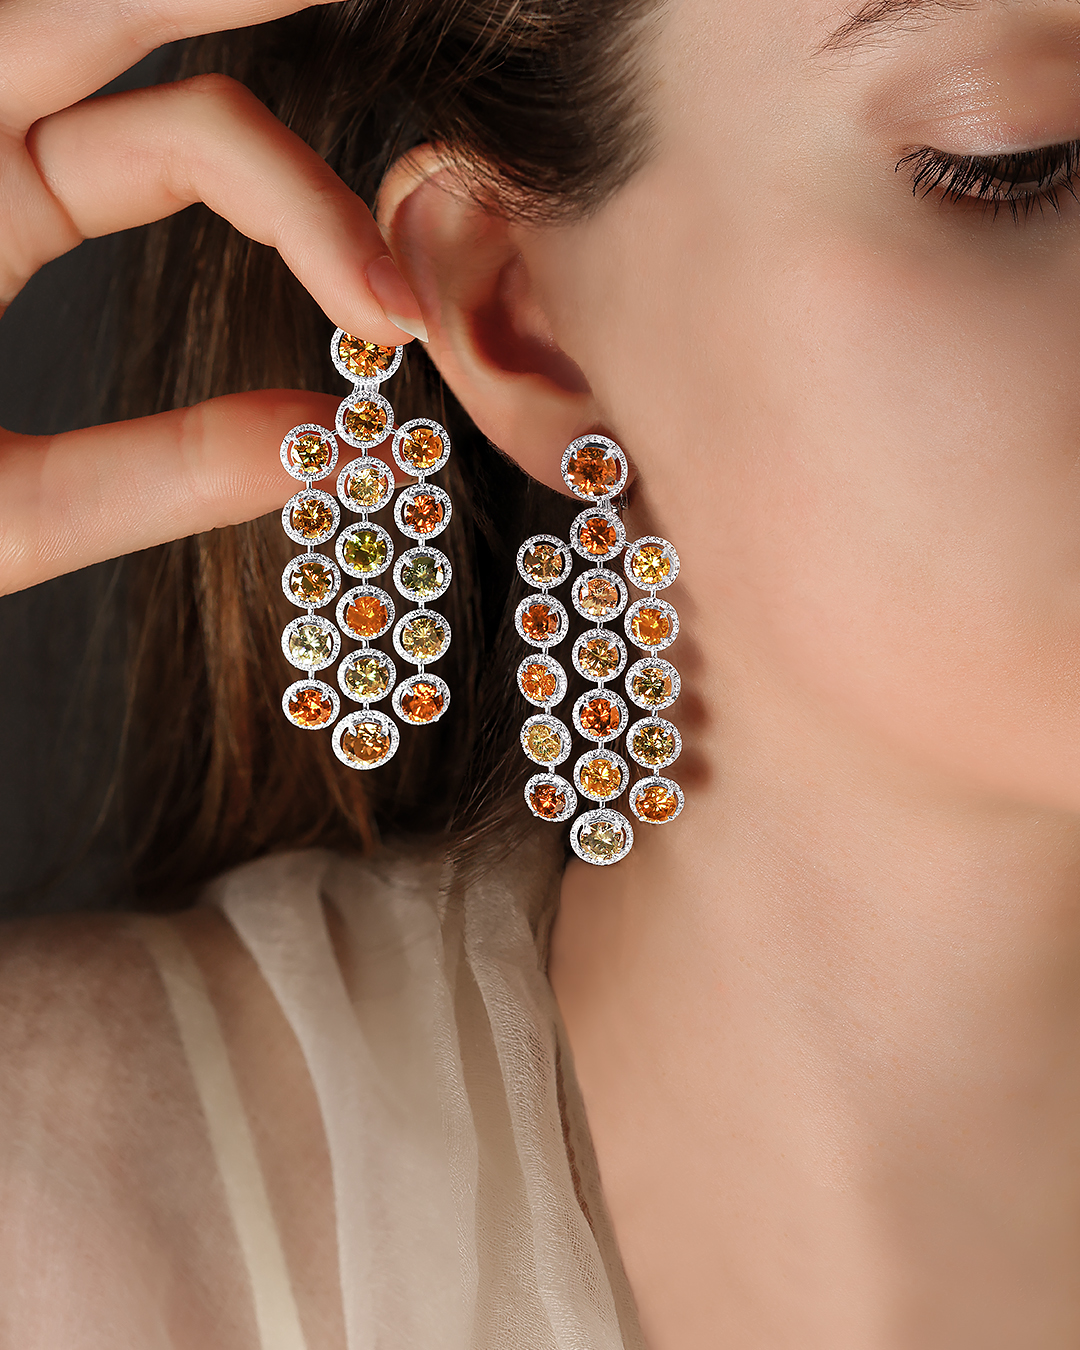 celia fabbri photography high jewellery chatila jewels multicolors brown orange gemstones earrings